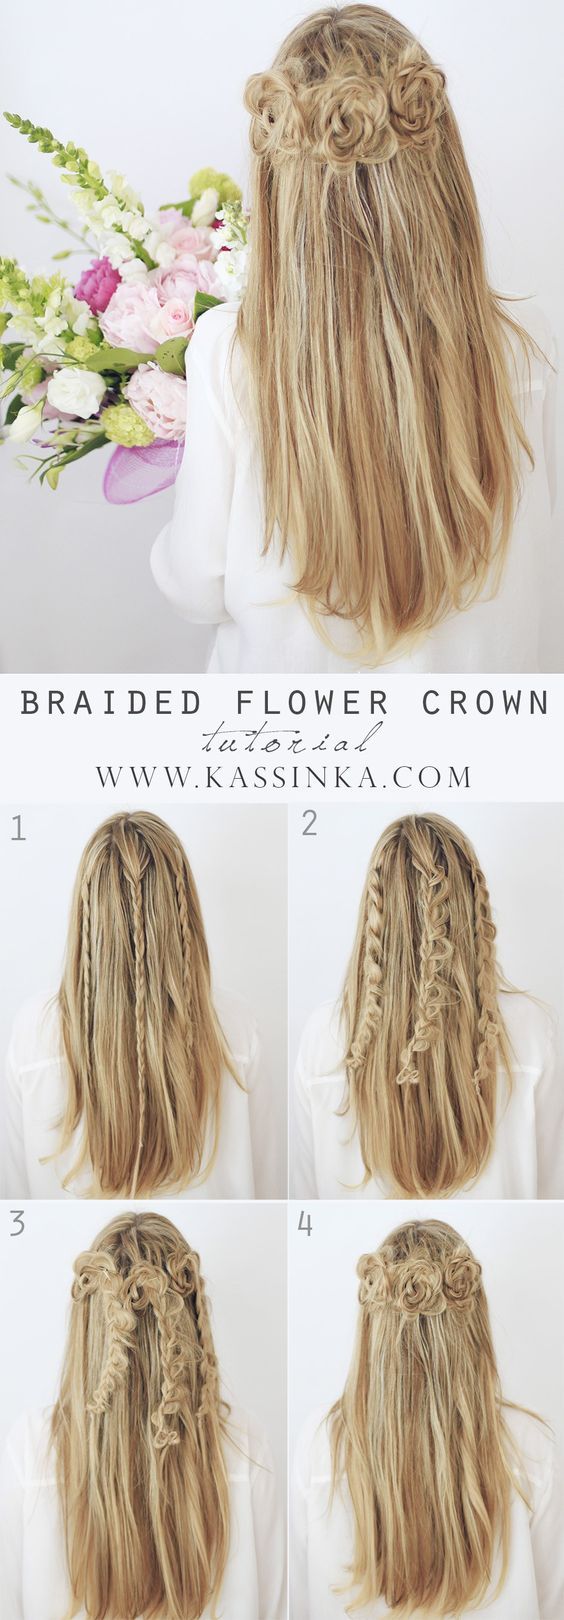 Braided flower crown wedding hair tutorial